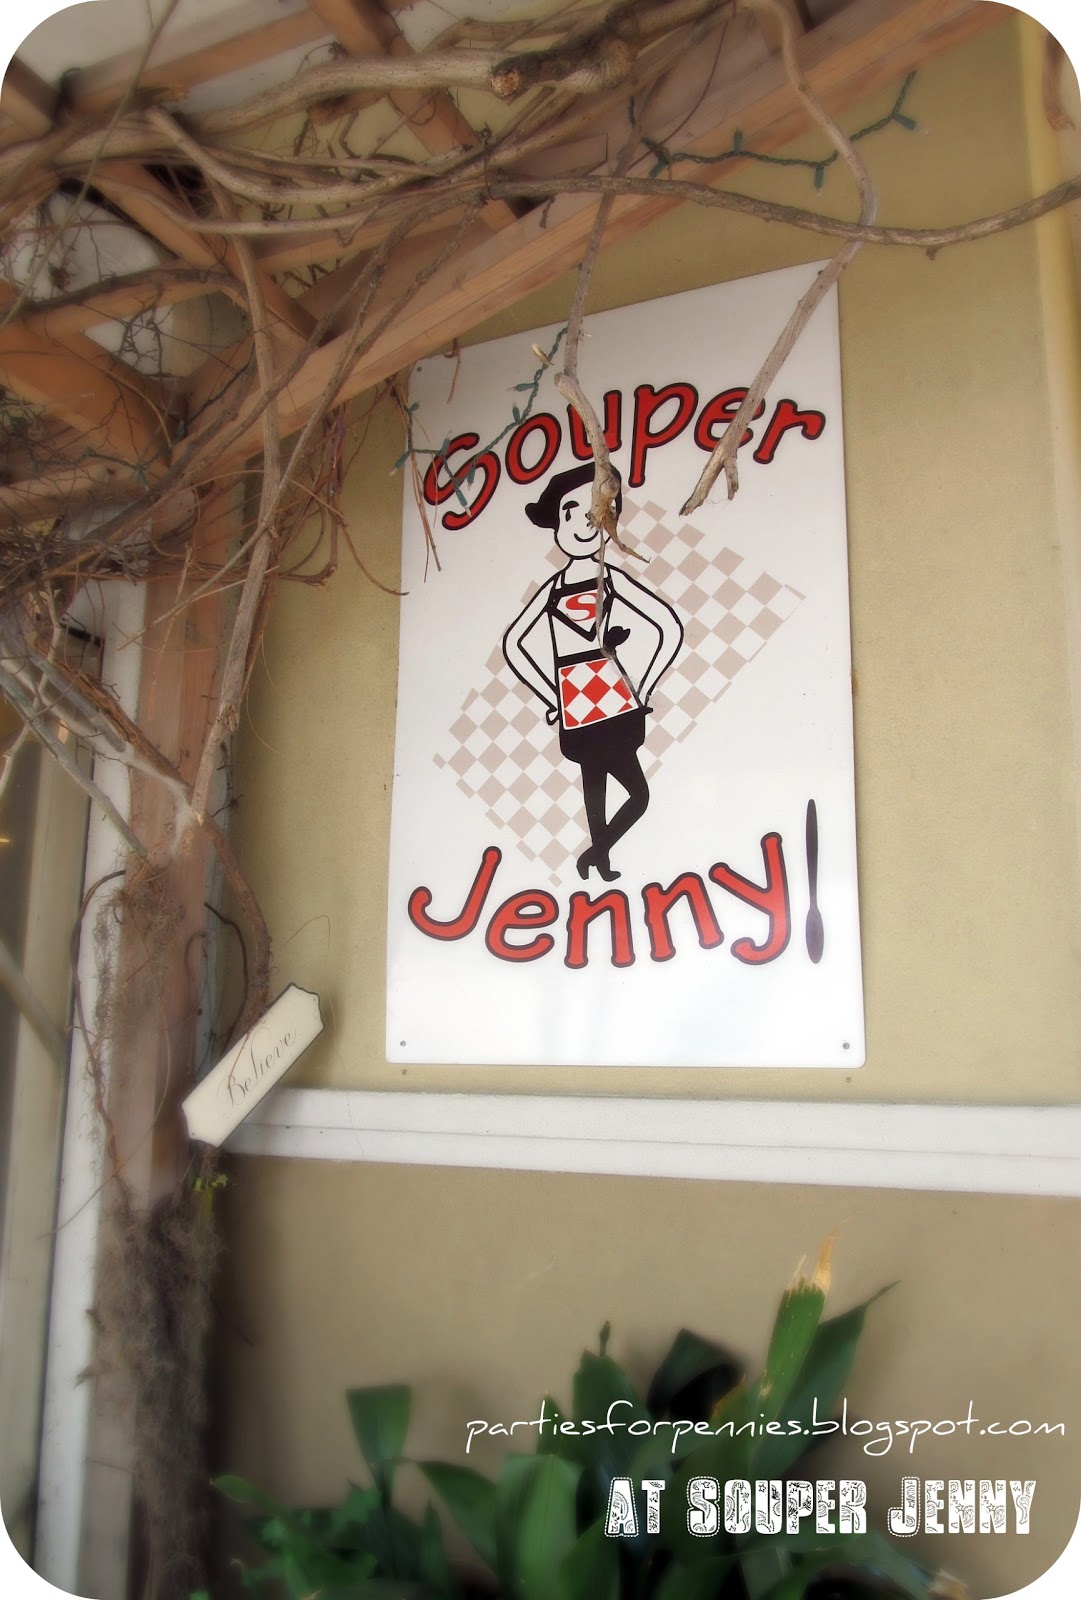 Parties For Pennies: Souper Jenny!